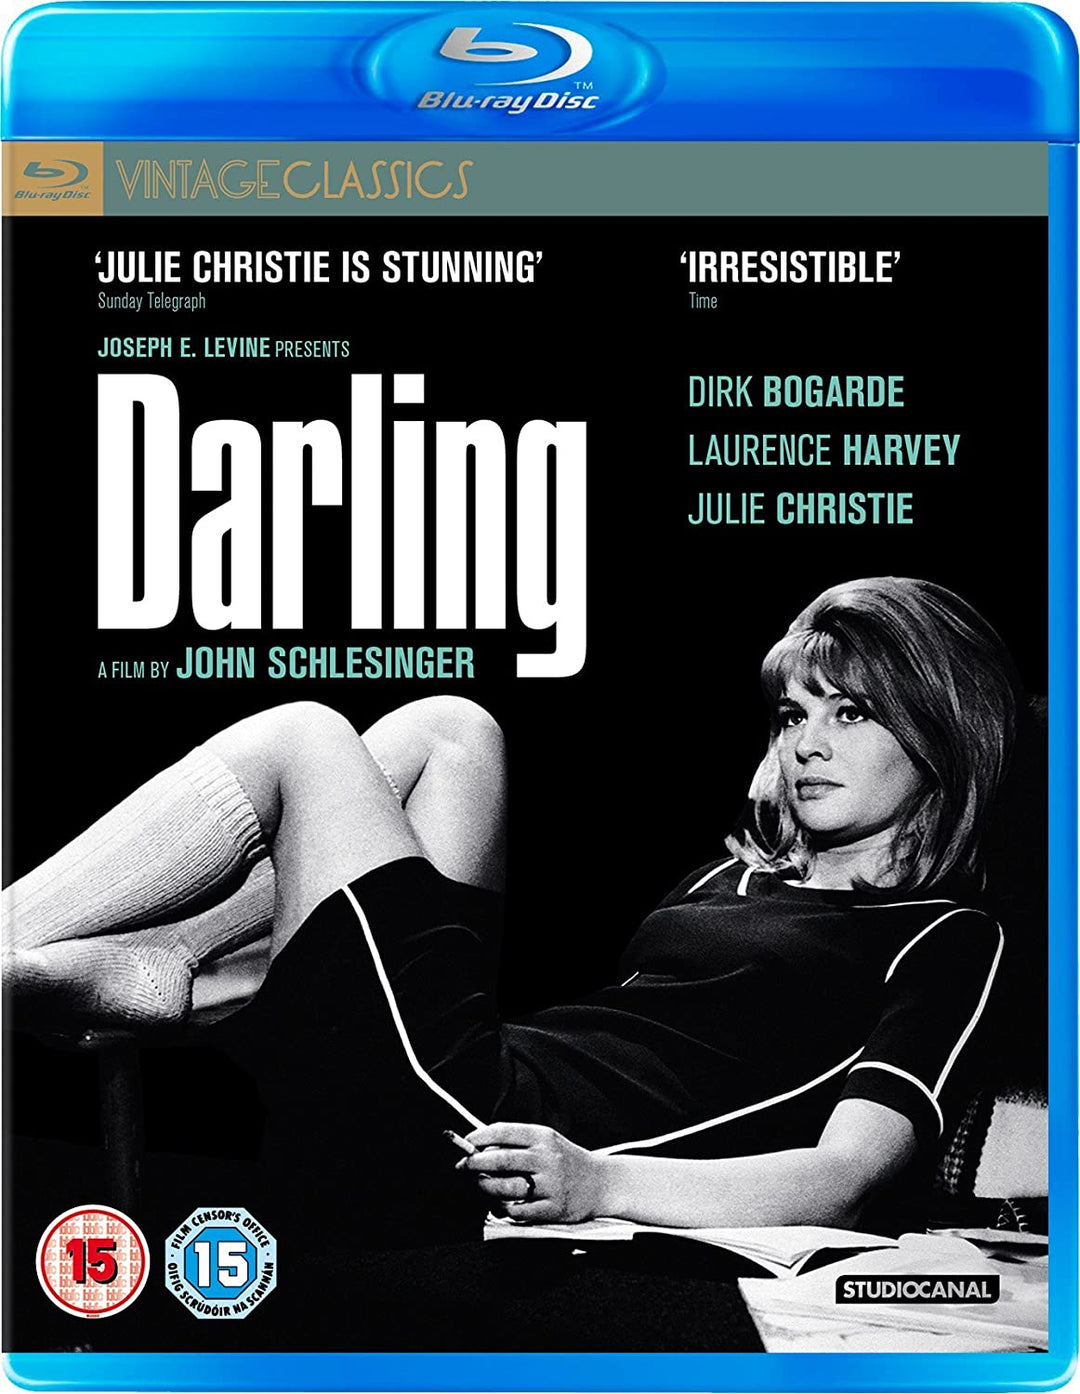 Darling *Digitally Restored [1965] - Romance/Drama [Blu-Ray]